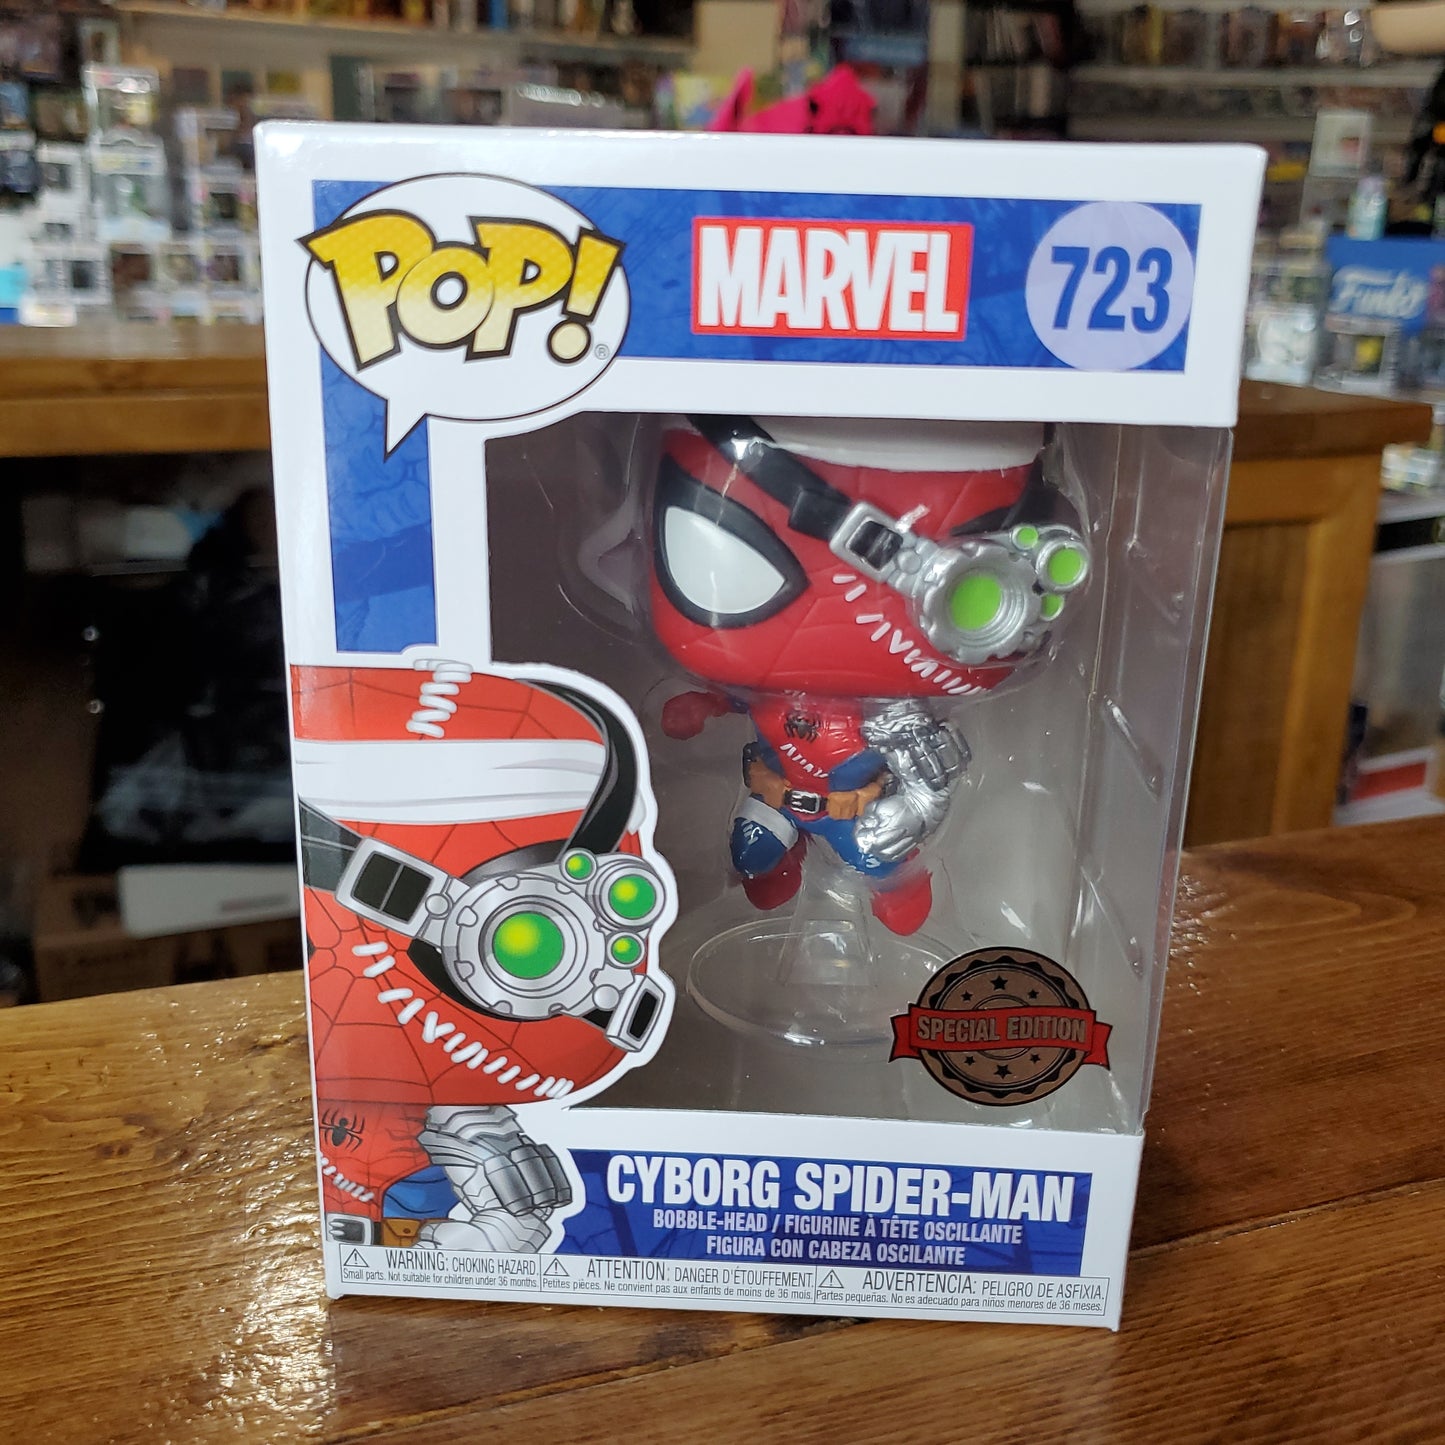 Cyborg Spiderman #723 - Exclusive Funko Pop! Vinyl Figure (Marvel)